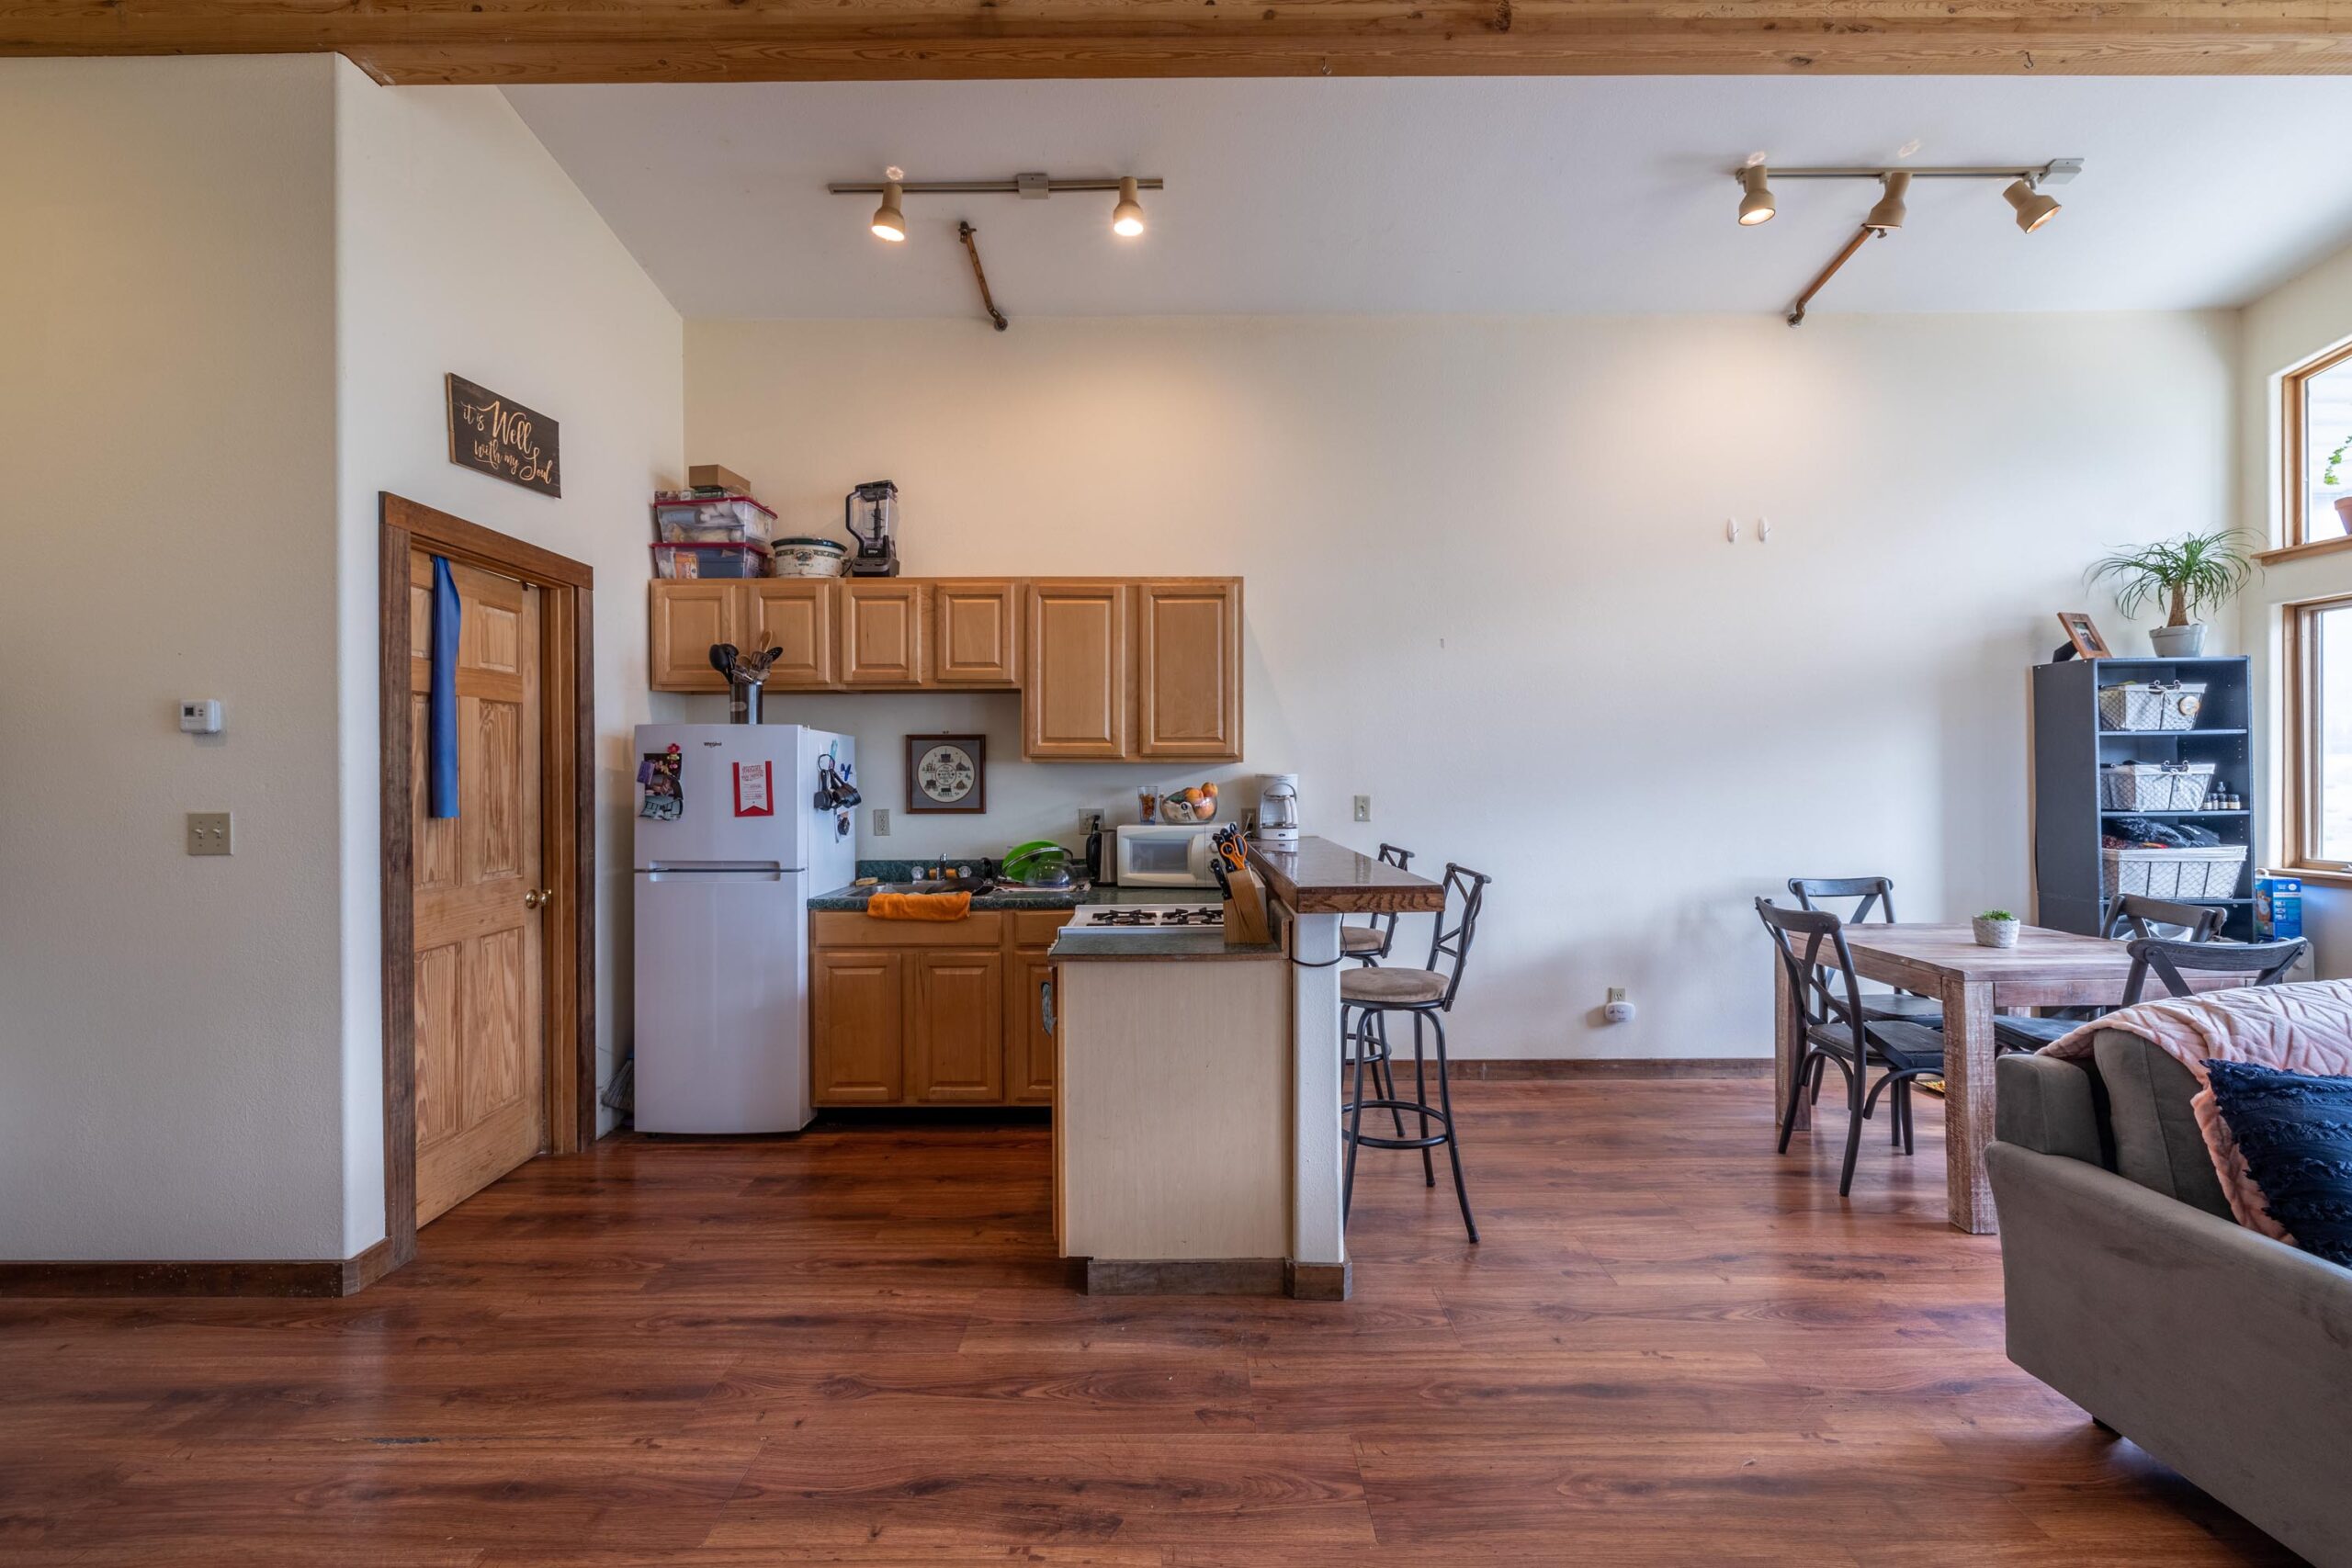 571 Riverland Drive, Crested Butte Colorado - apartment kitchen